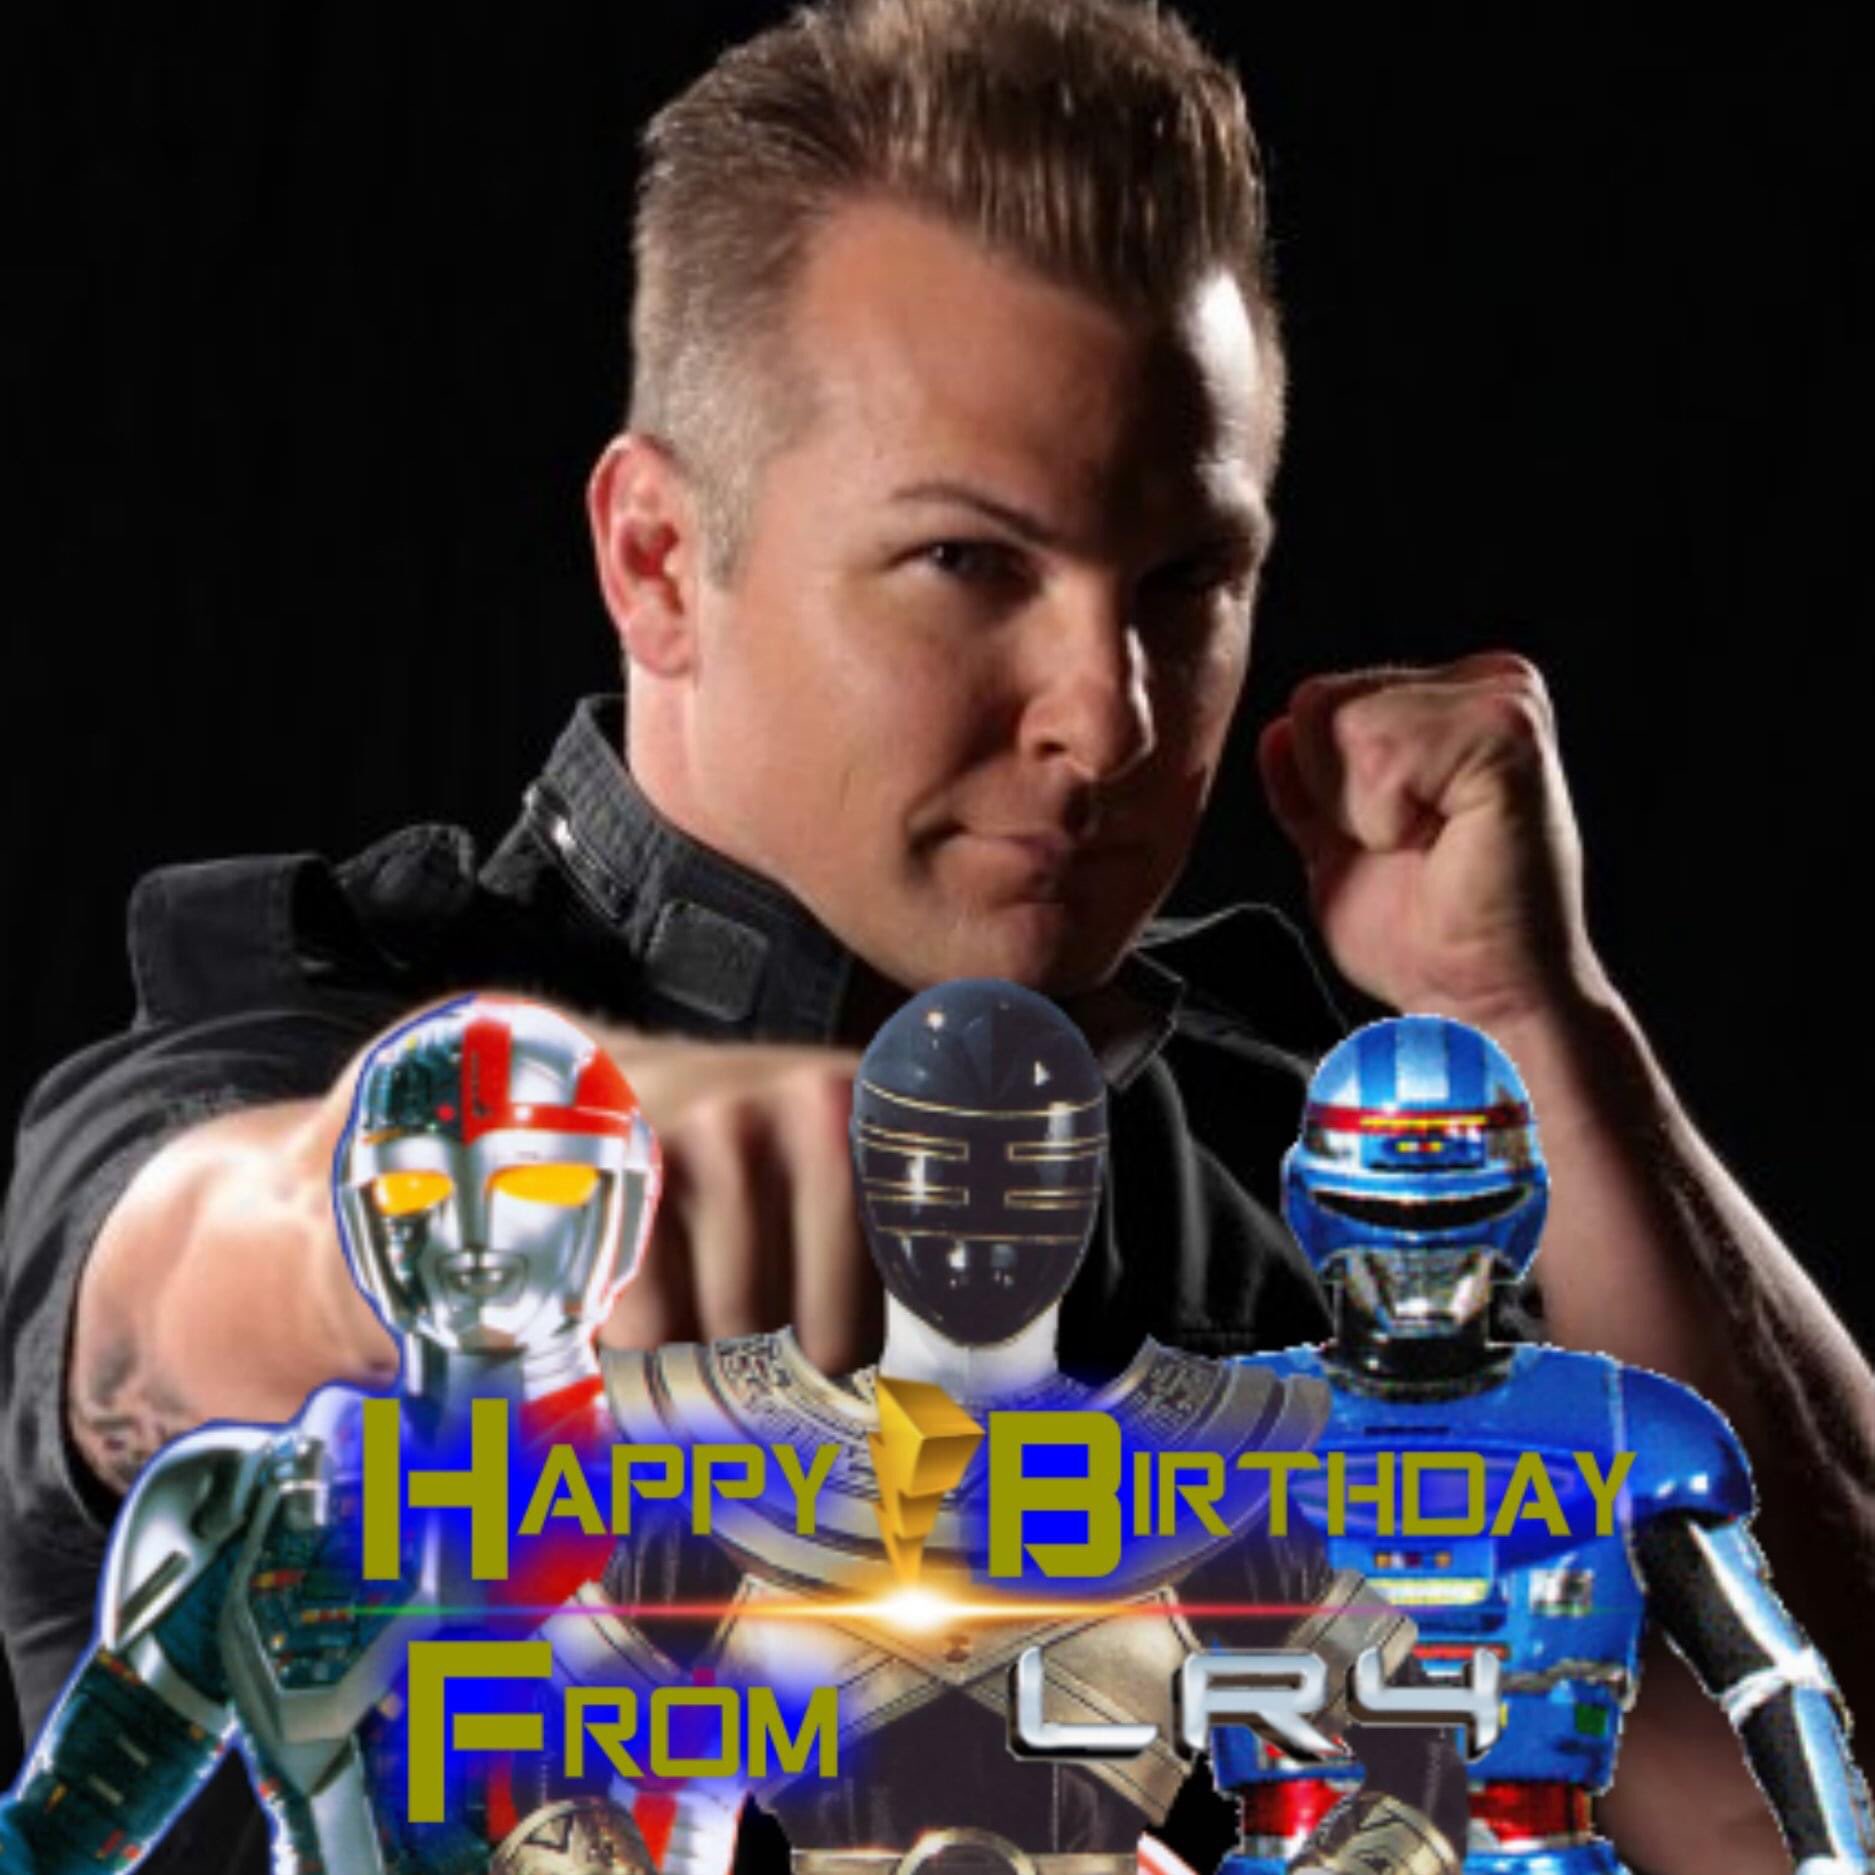 LR4 would like to wish Brad Hawkins a Happy Birthday! 